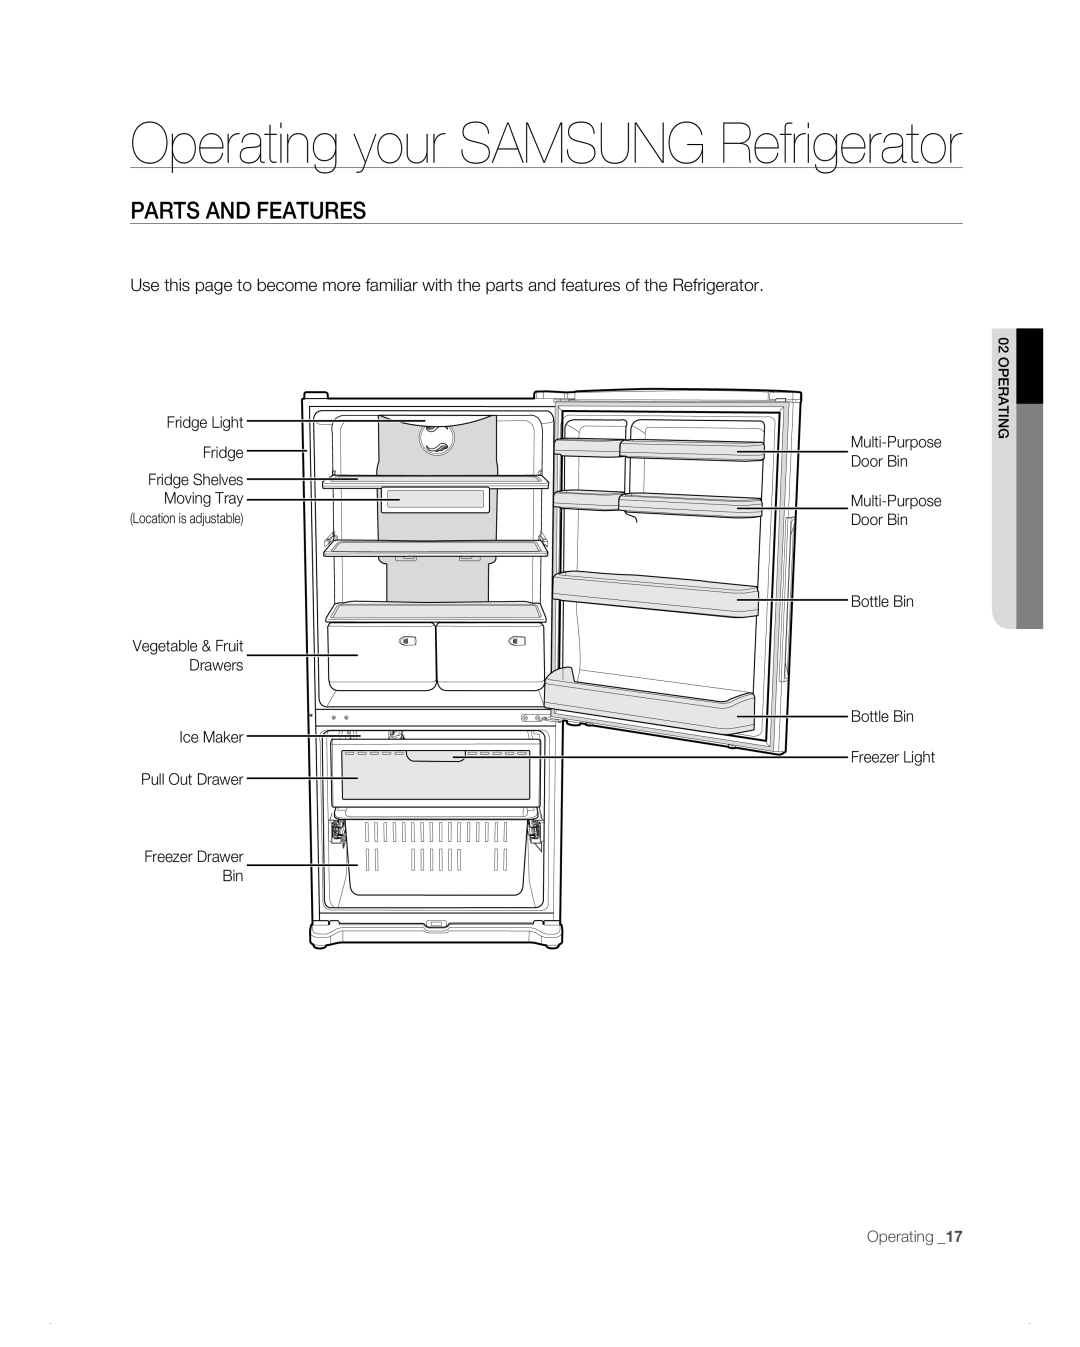 Samsung RB197AB, RB217AB Parts And Features, Operating your SAMSUNG Refrigerator, Fridge Light, Door Bin, Fridge Shelves 